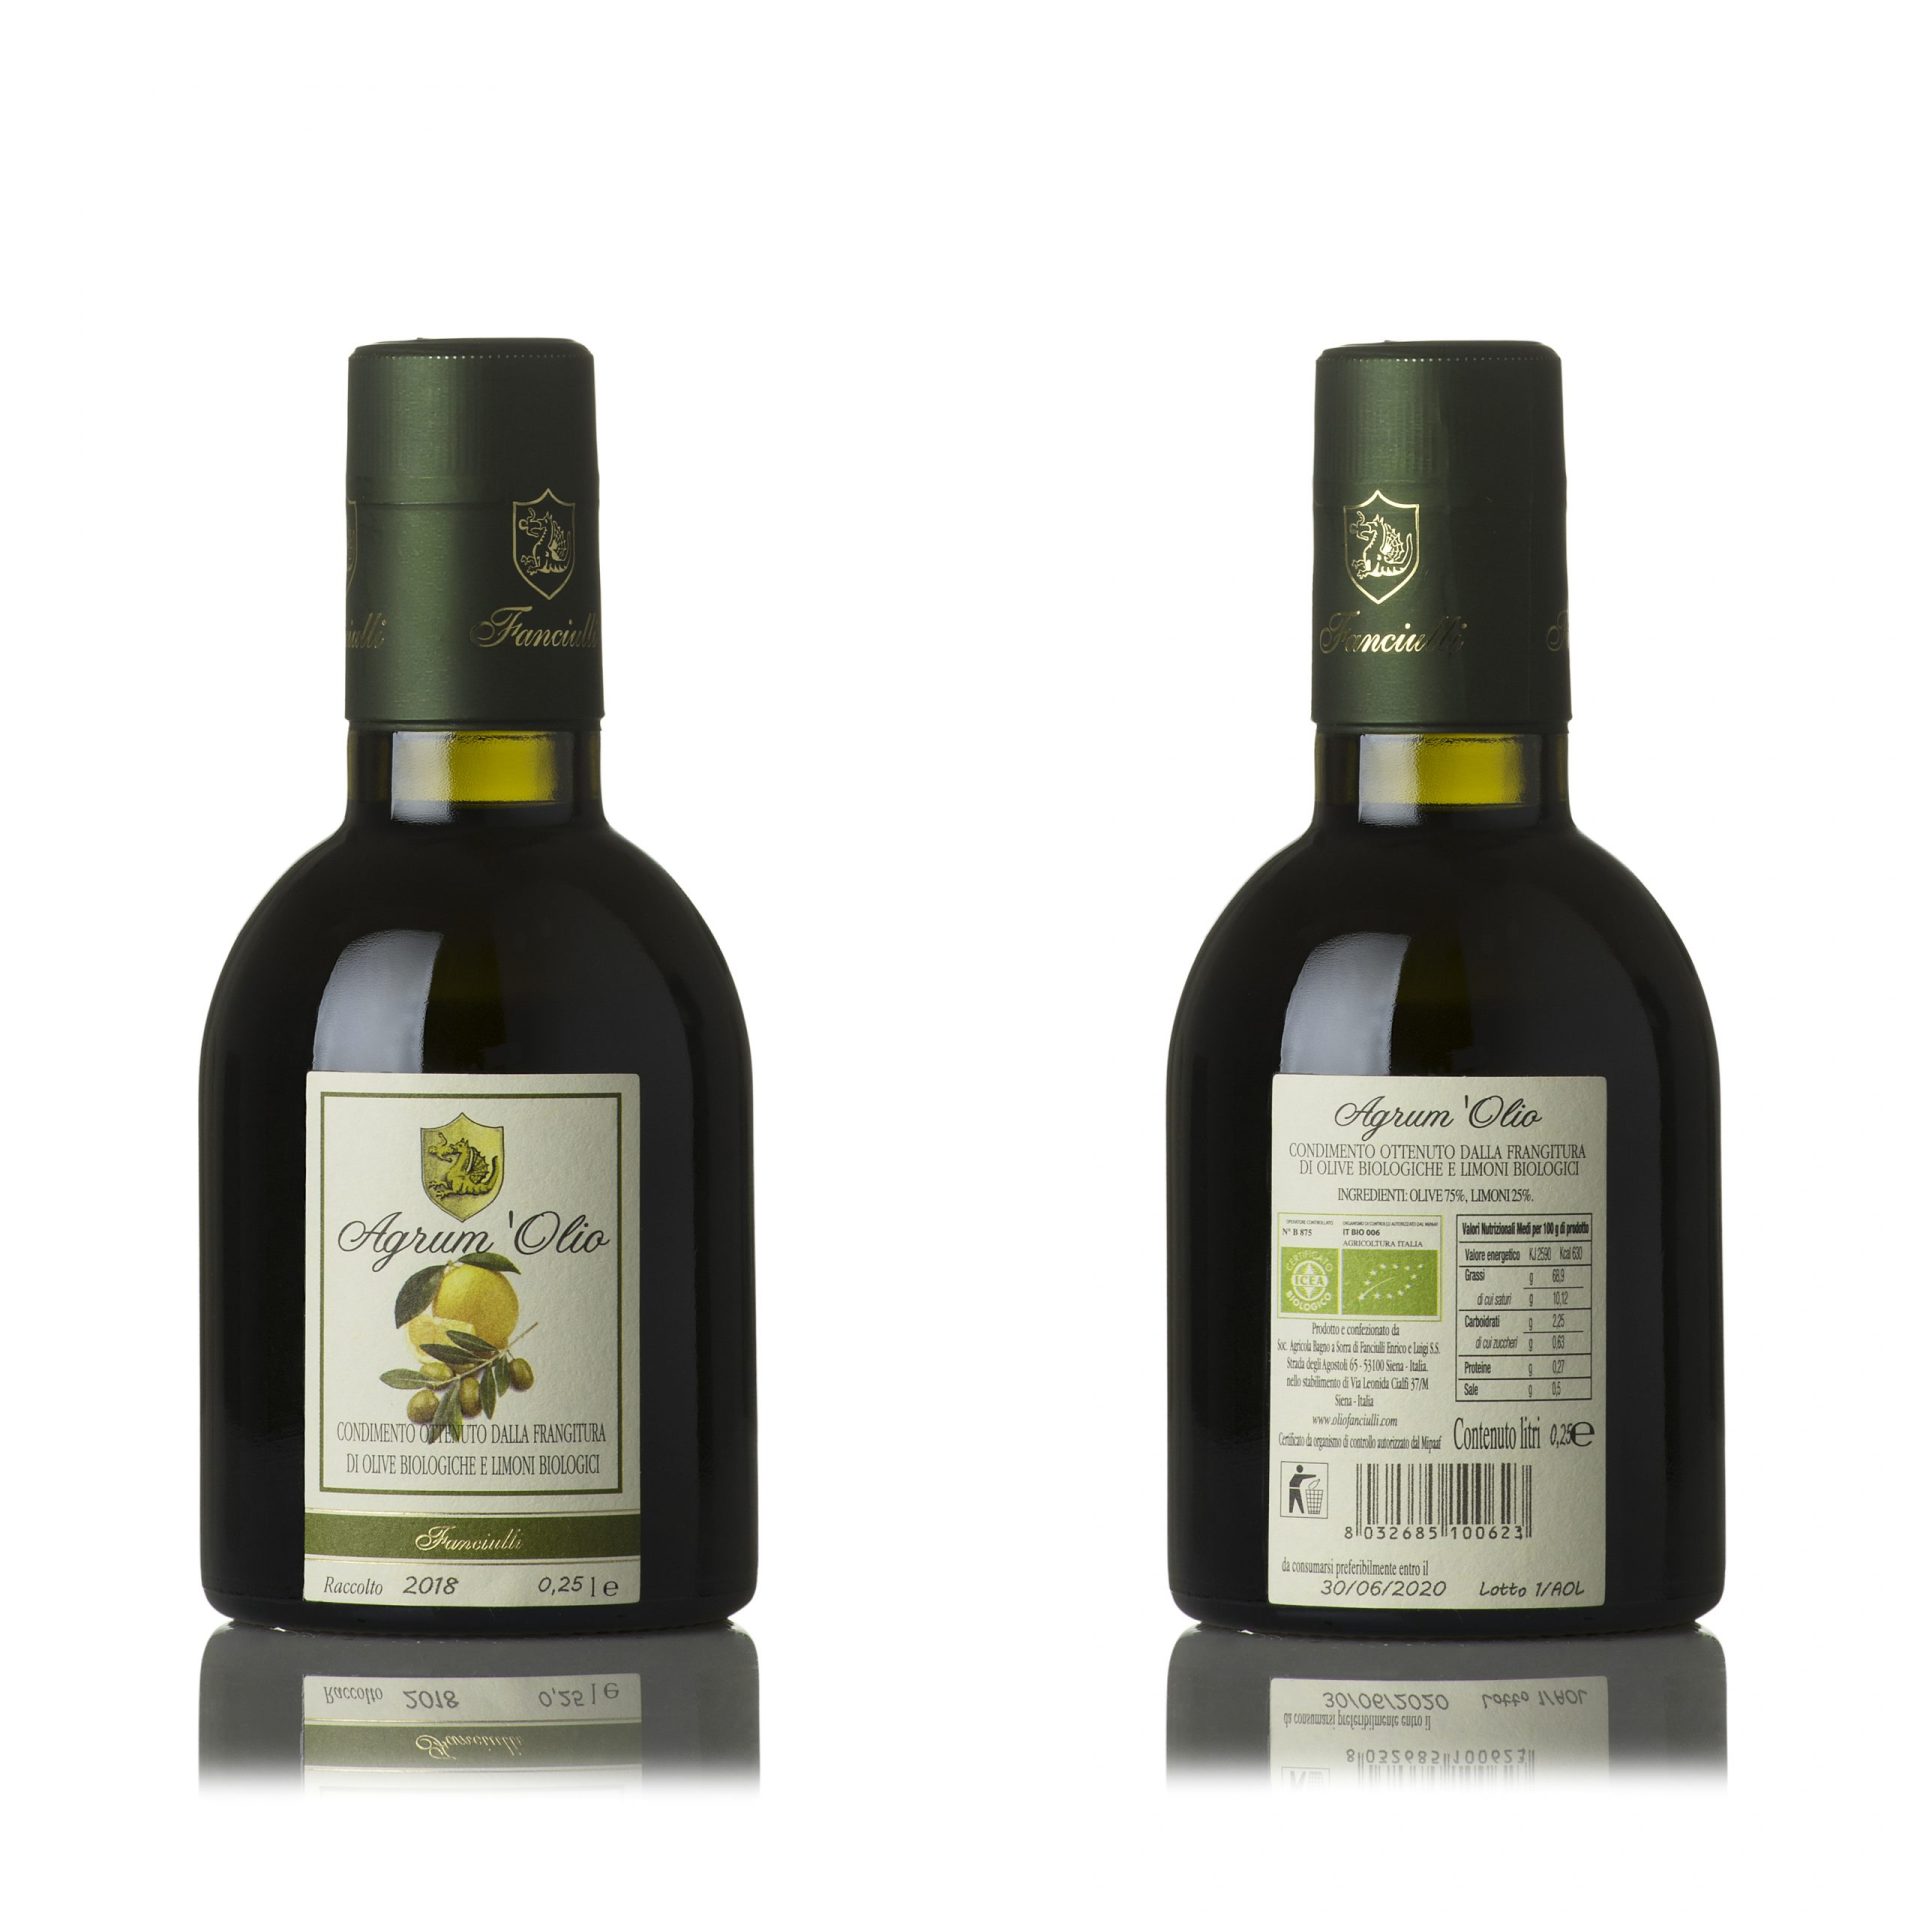 condimenti agrumi olio extra vergine d'oliva toscano biologico Fanciulli